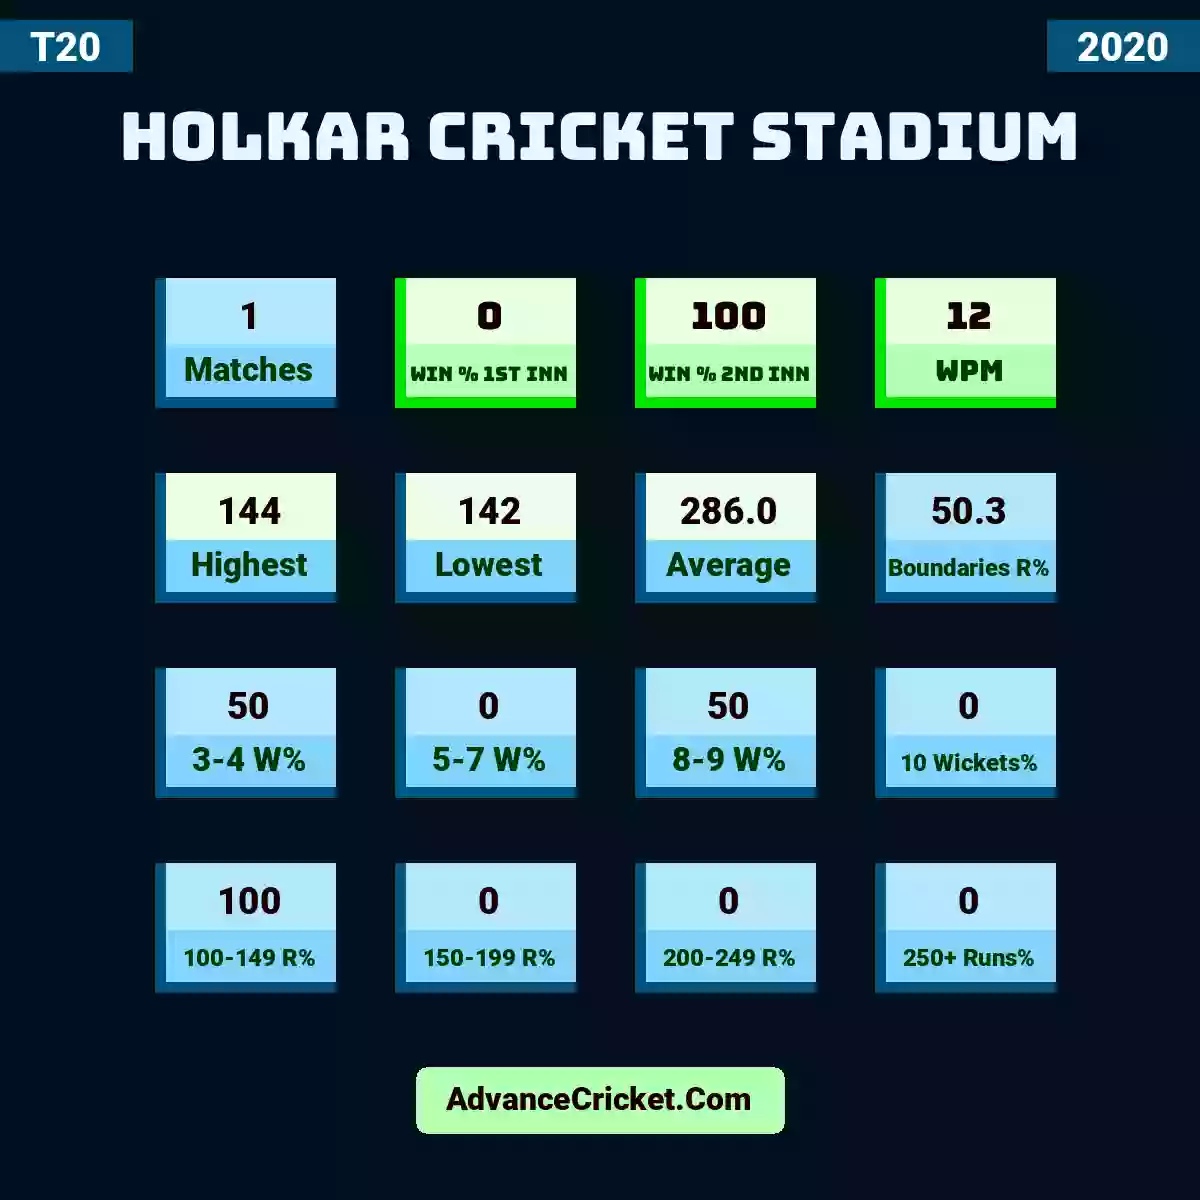 Image showing Holkar Cricket Stadium with Matches: 1, Win % 1st Inn: 0, Win % 2nd Inn: 100, WPM: 12, Highest: 144, Lowest: 142, Average: 286.0, Boundaries R%: 50.3, 3-4 W%: 50, 5-7 W%: 0, 8-9 W%: 50, 10 Wickets%: 0, 100-149 R%: 100, 150-199 R%: 0, 200-249 R%: 0, 250+ Runs%: 0.